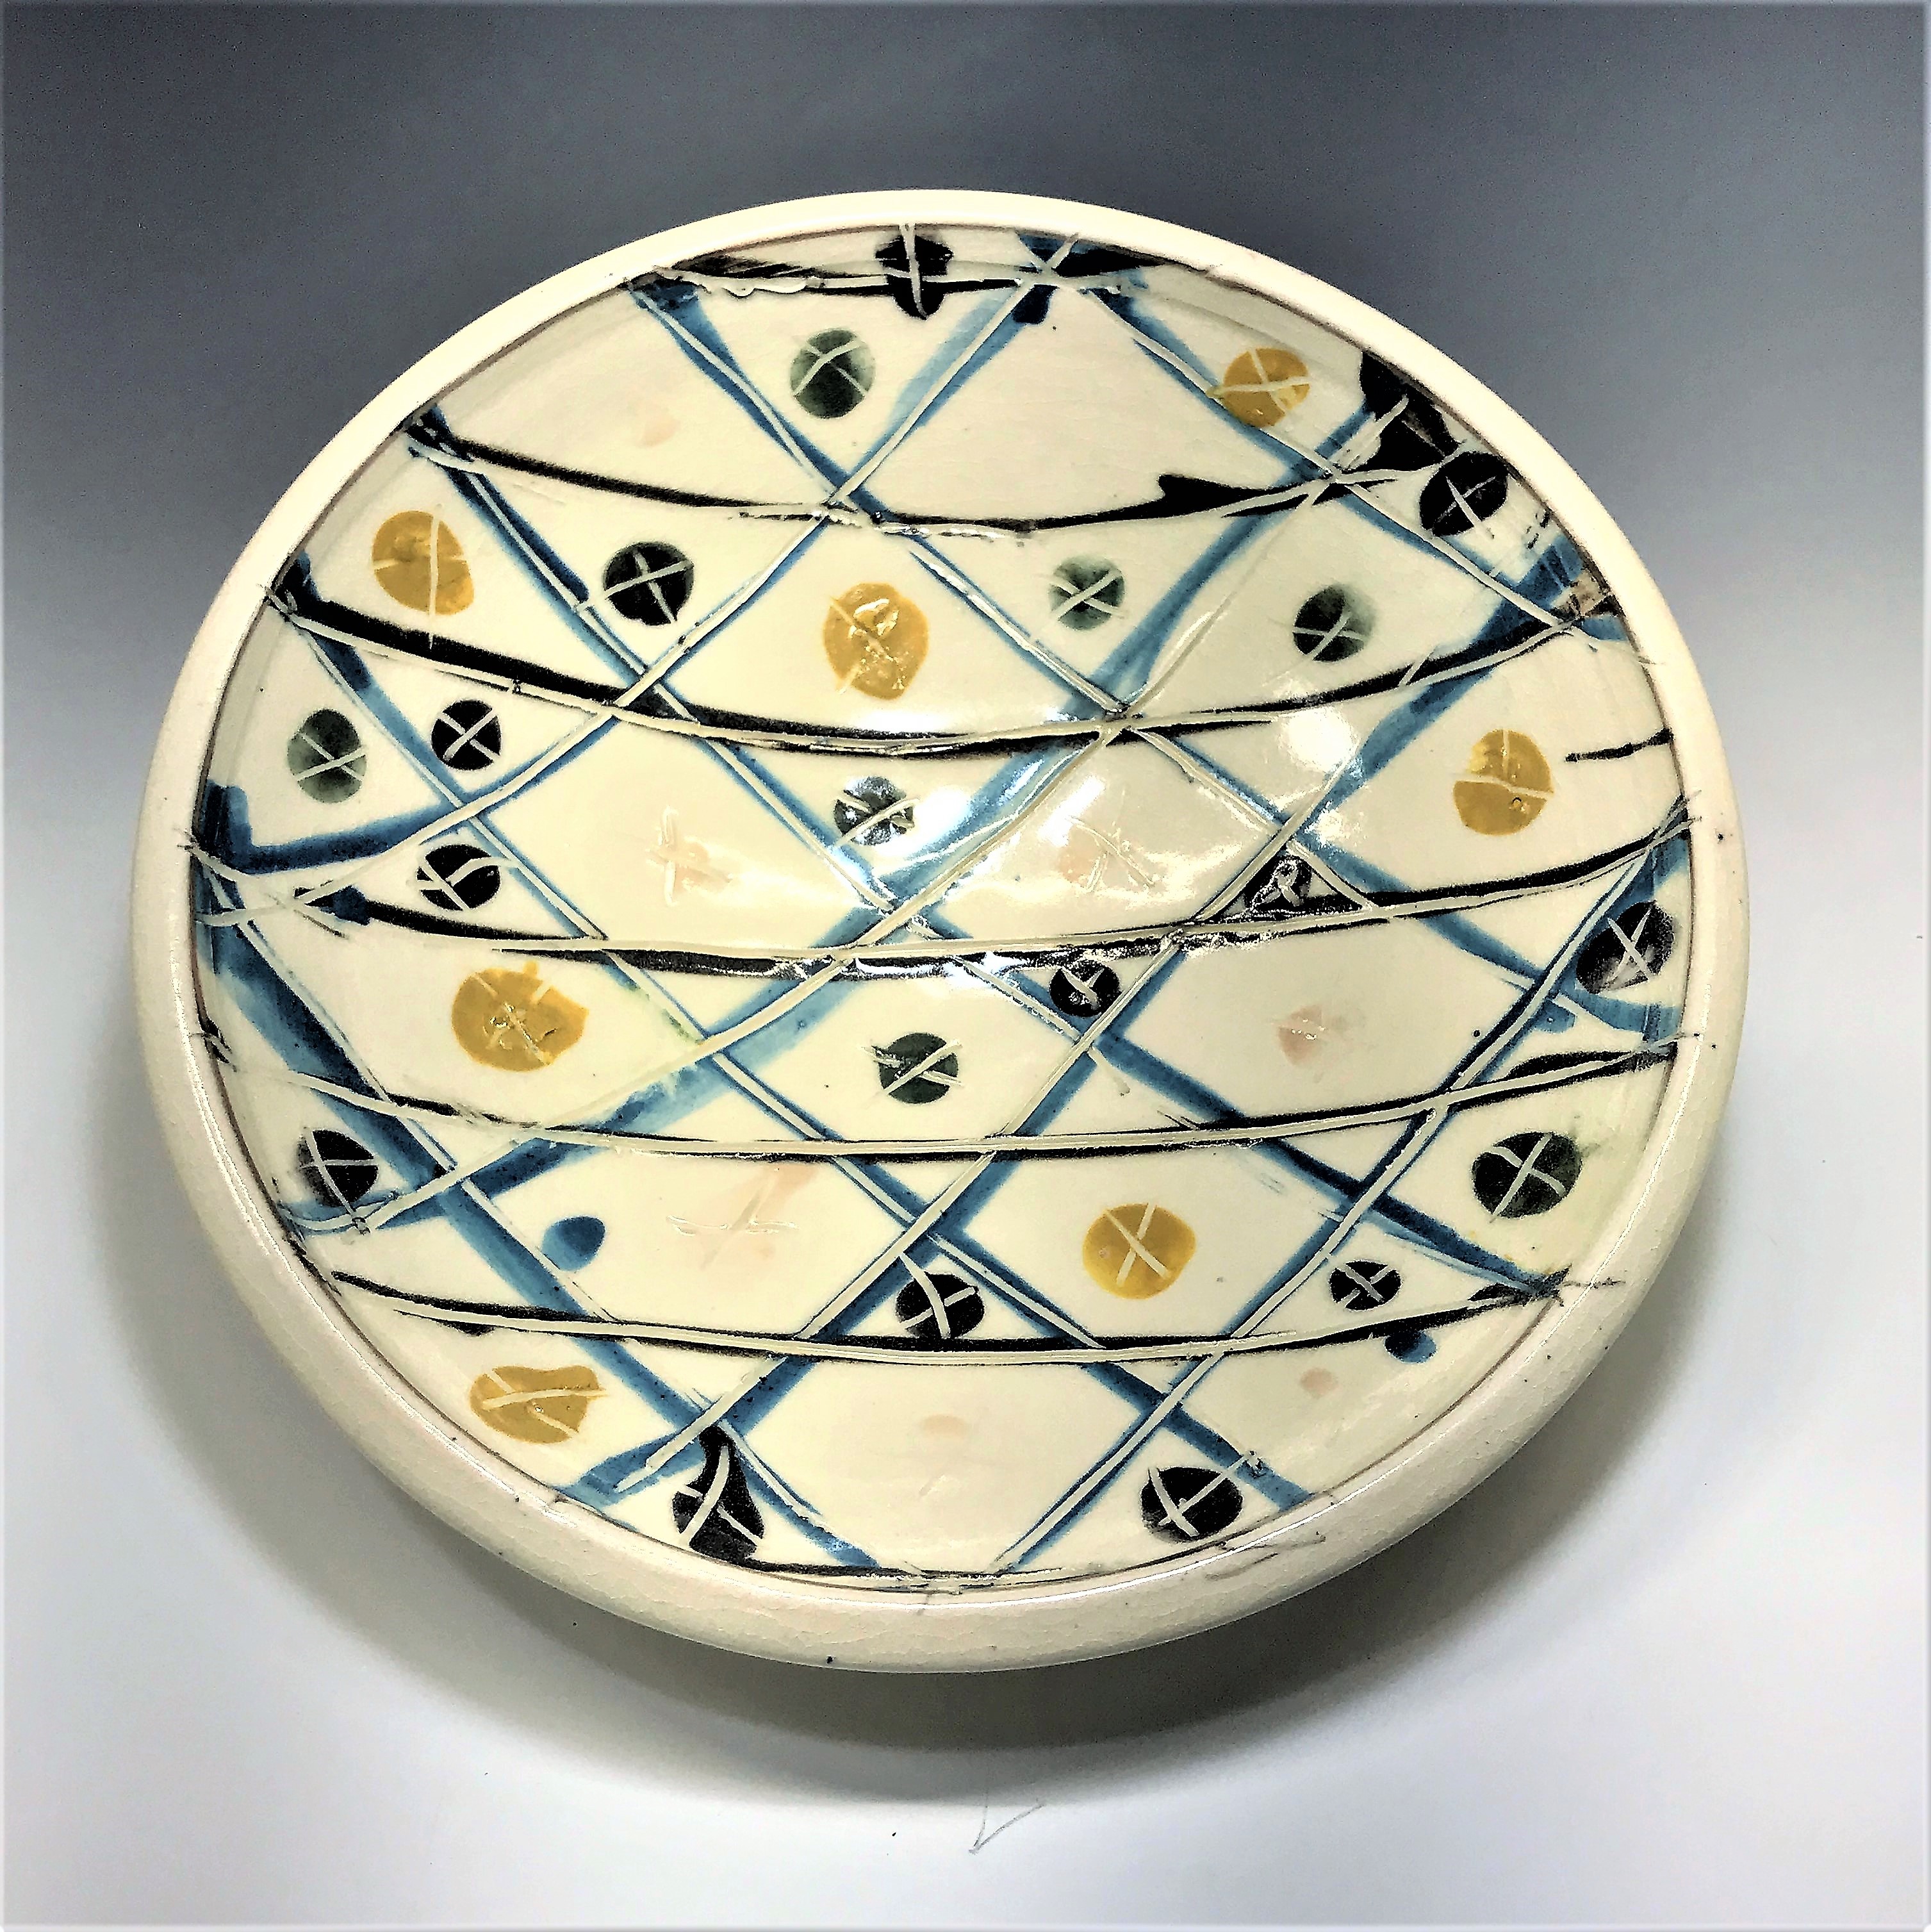 Stephen D. Frazier’s serving bowl 9 in. (23 cm) in diameter, white earthenware, underglaze, fired cone 1.